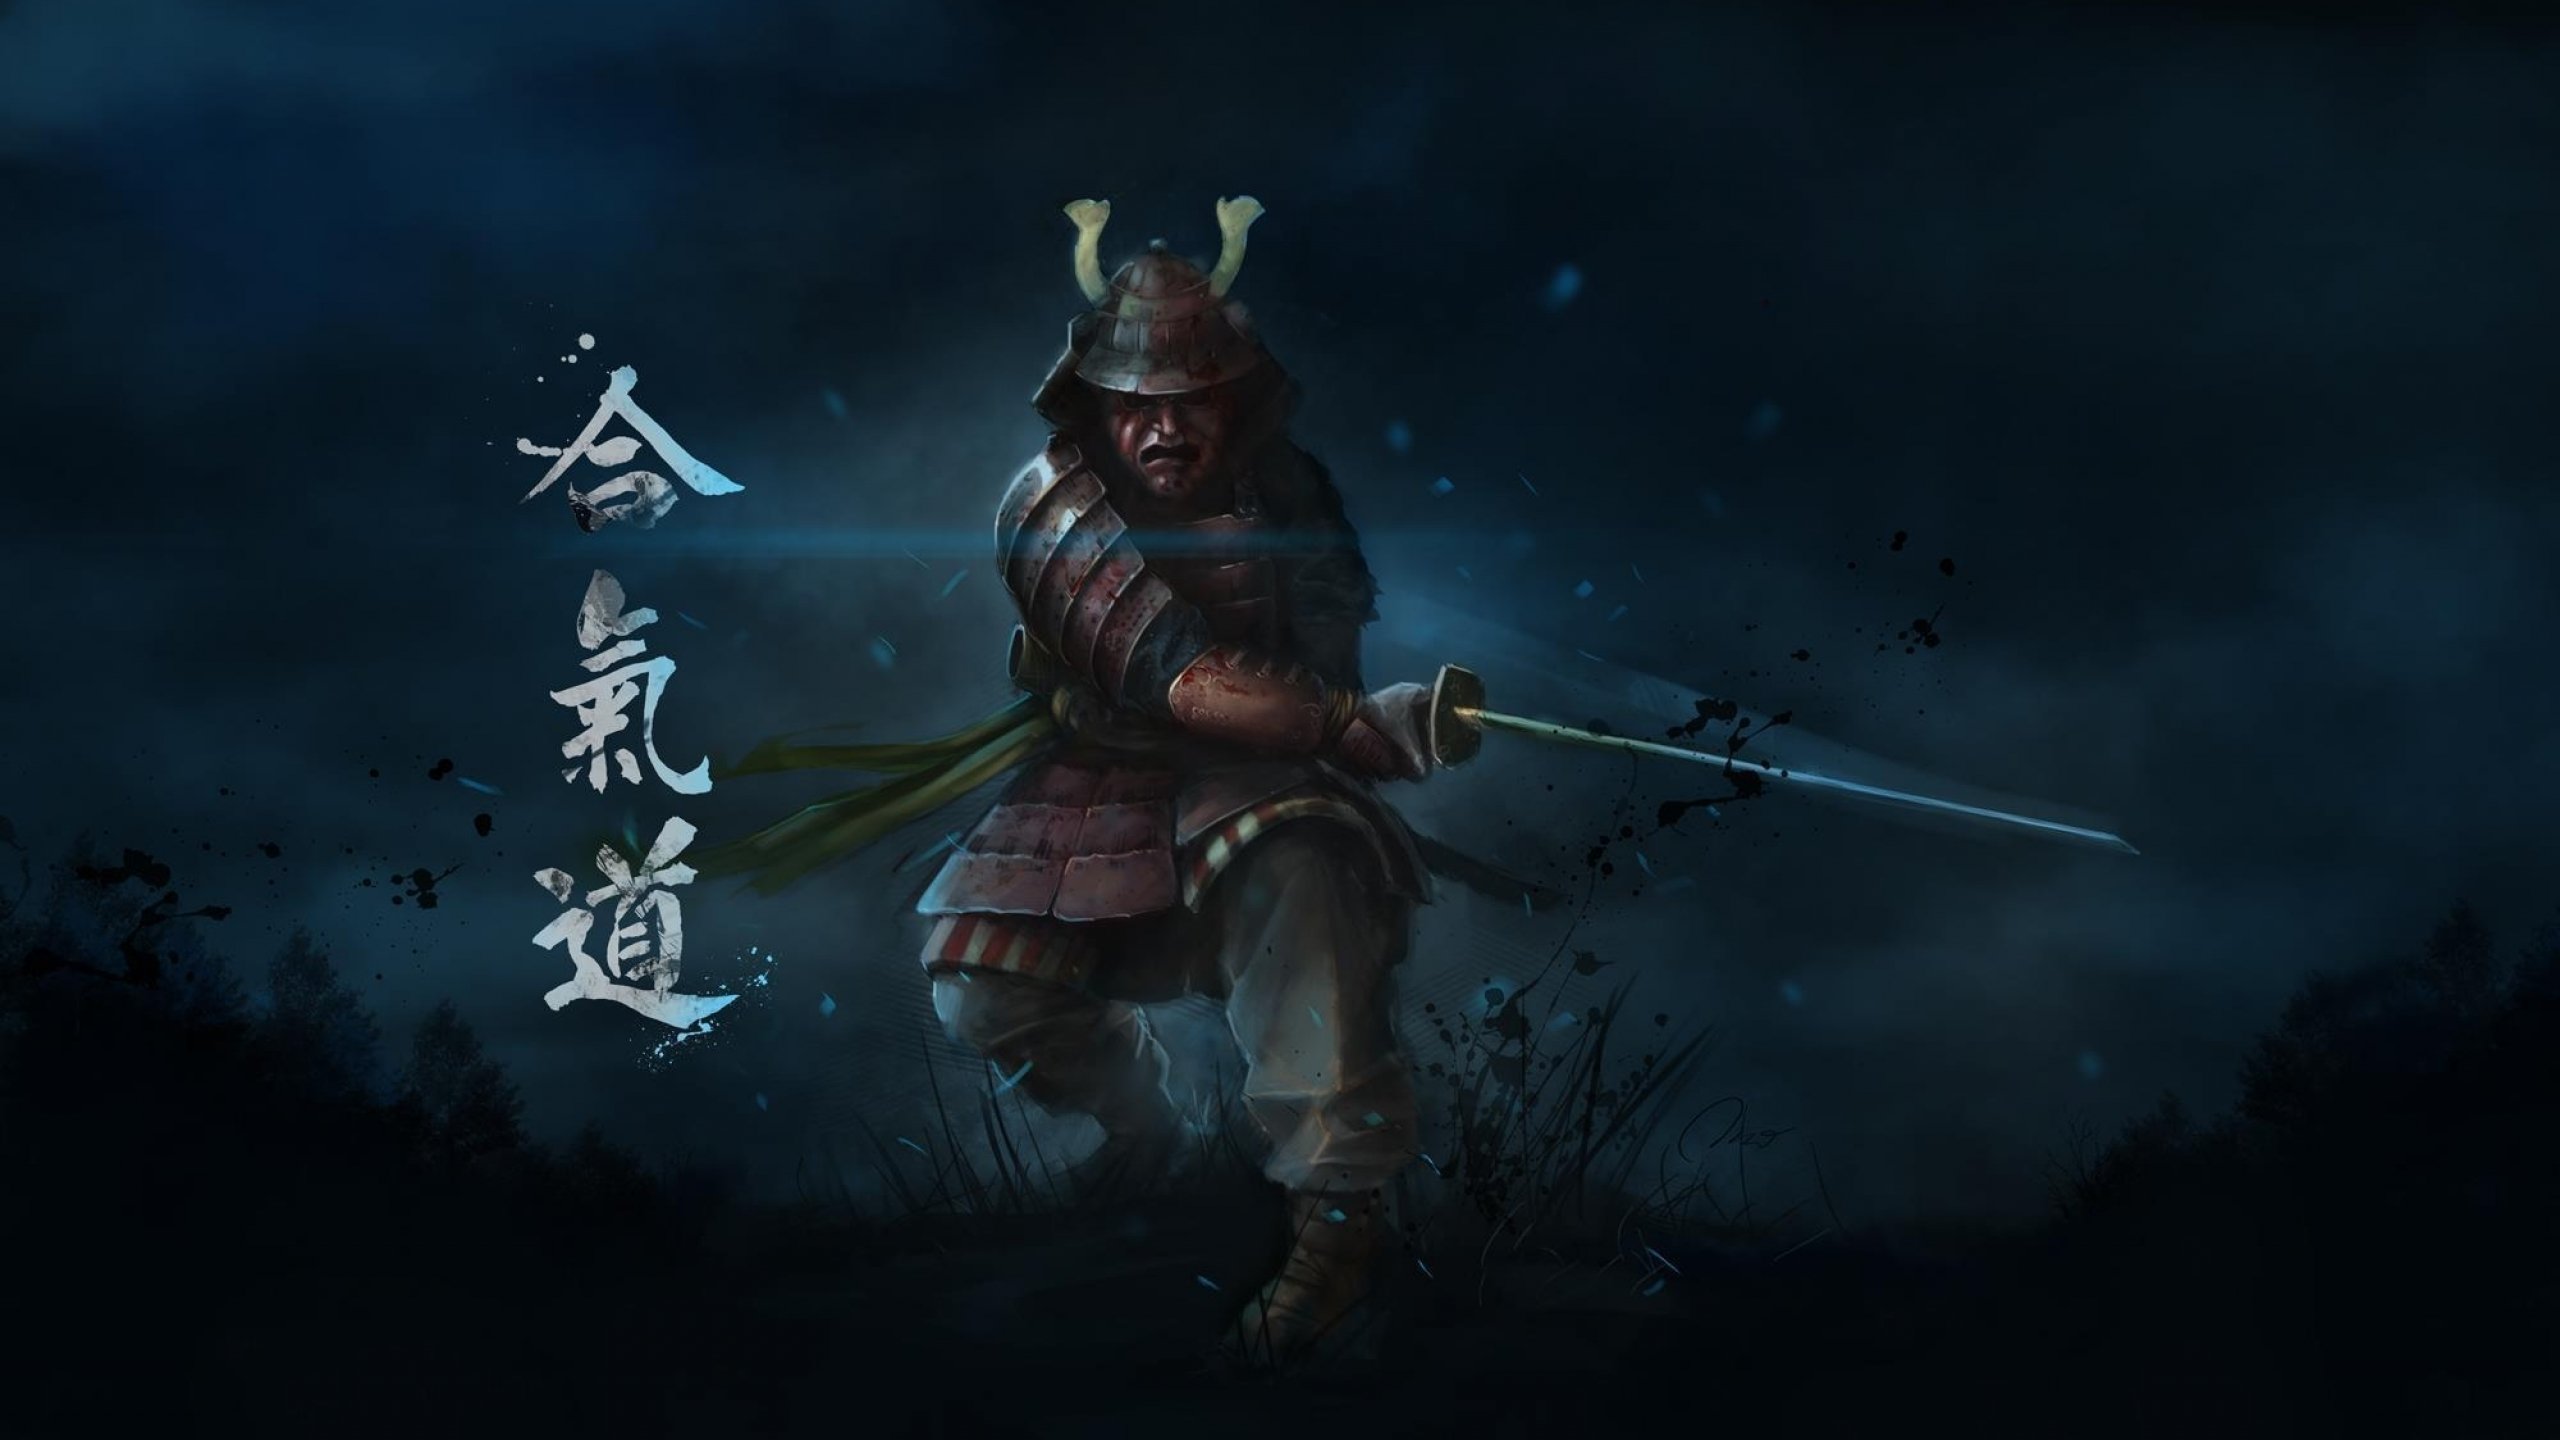 Samurai warrior fantasy art artwork asian wallpaper 2560x1440